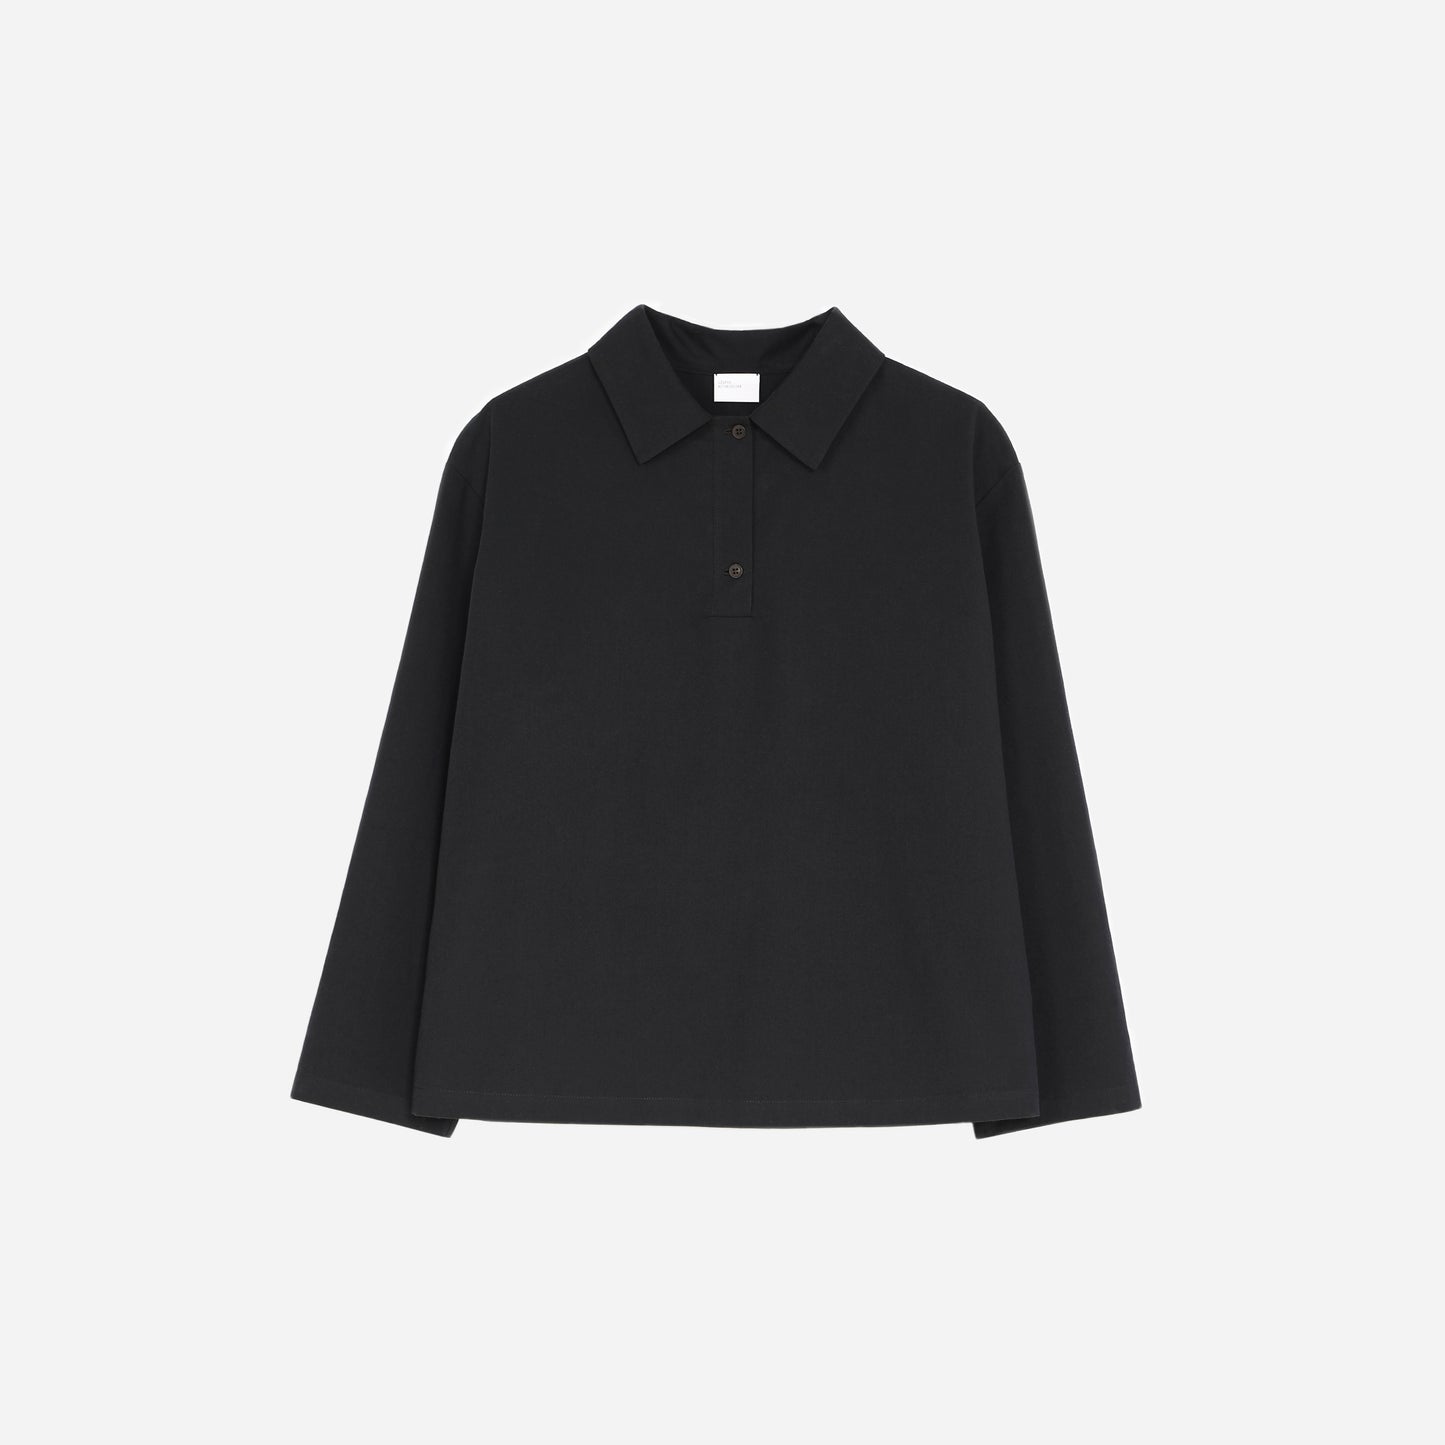 002 Black Polo Shirt